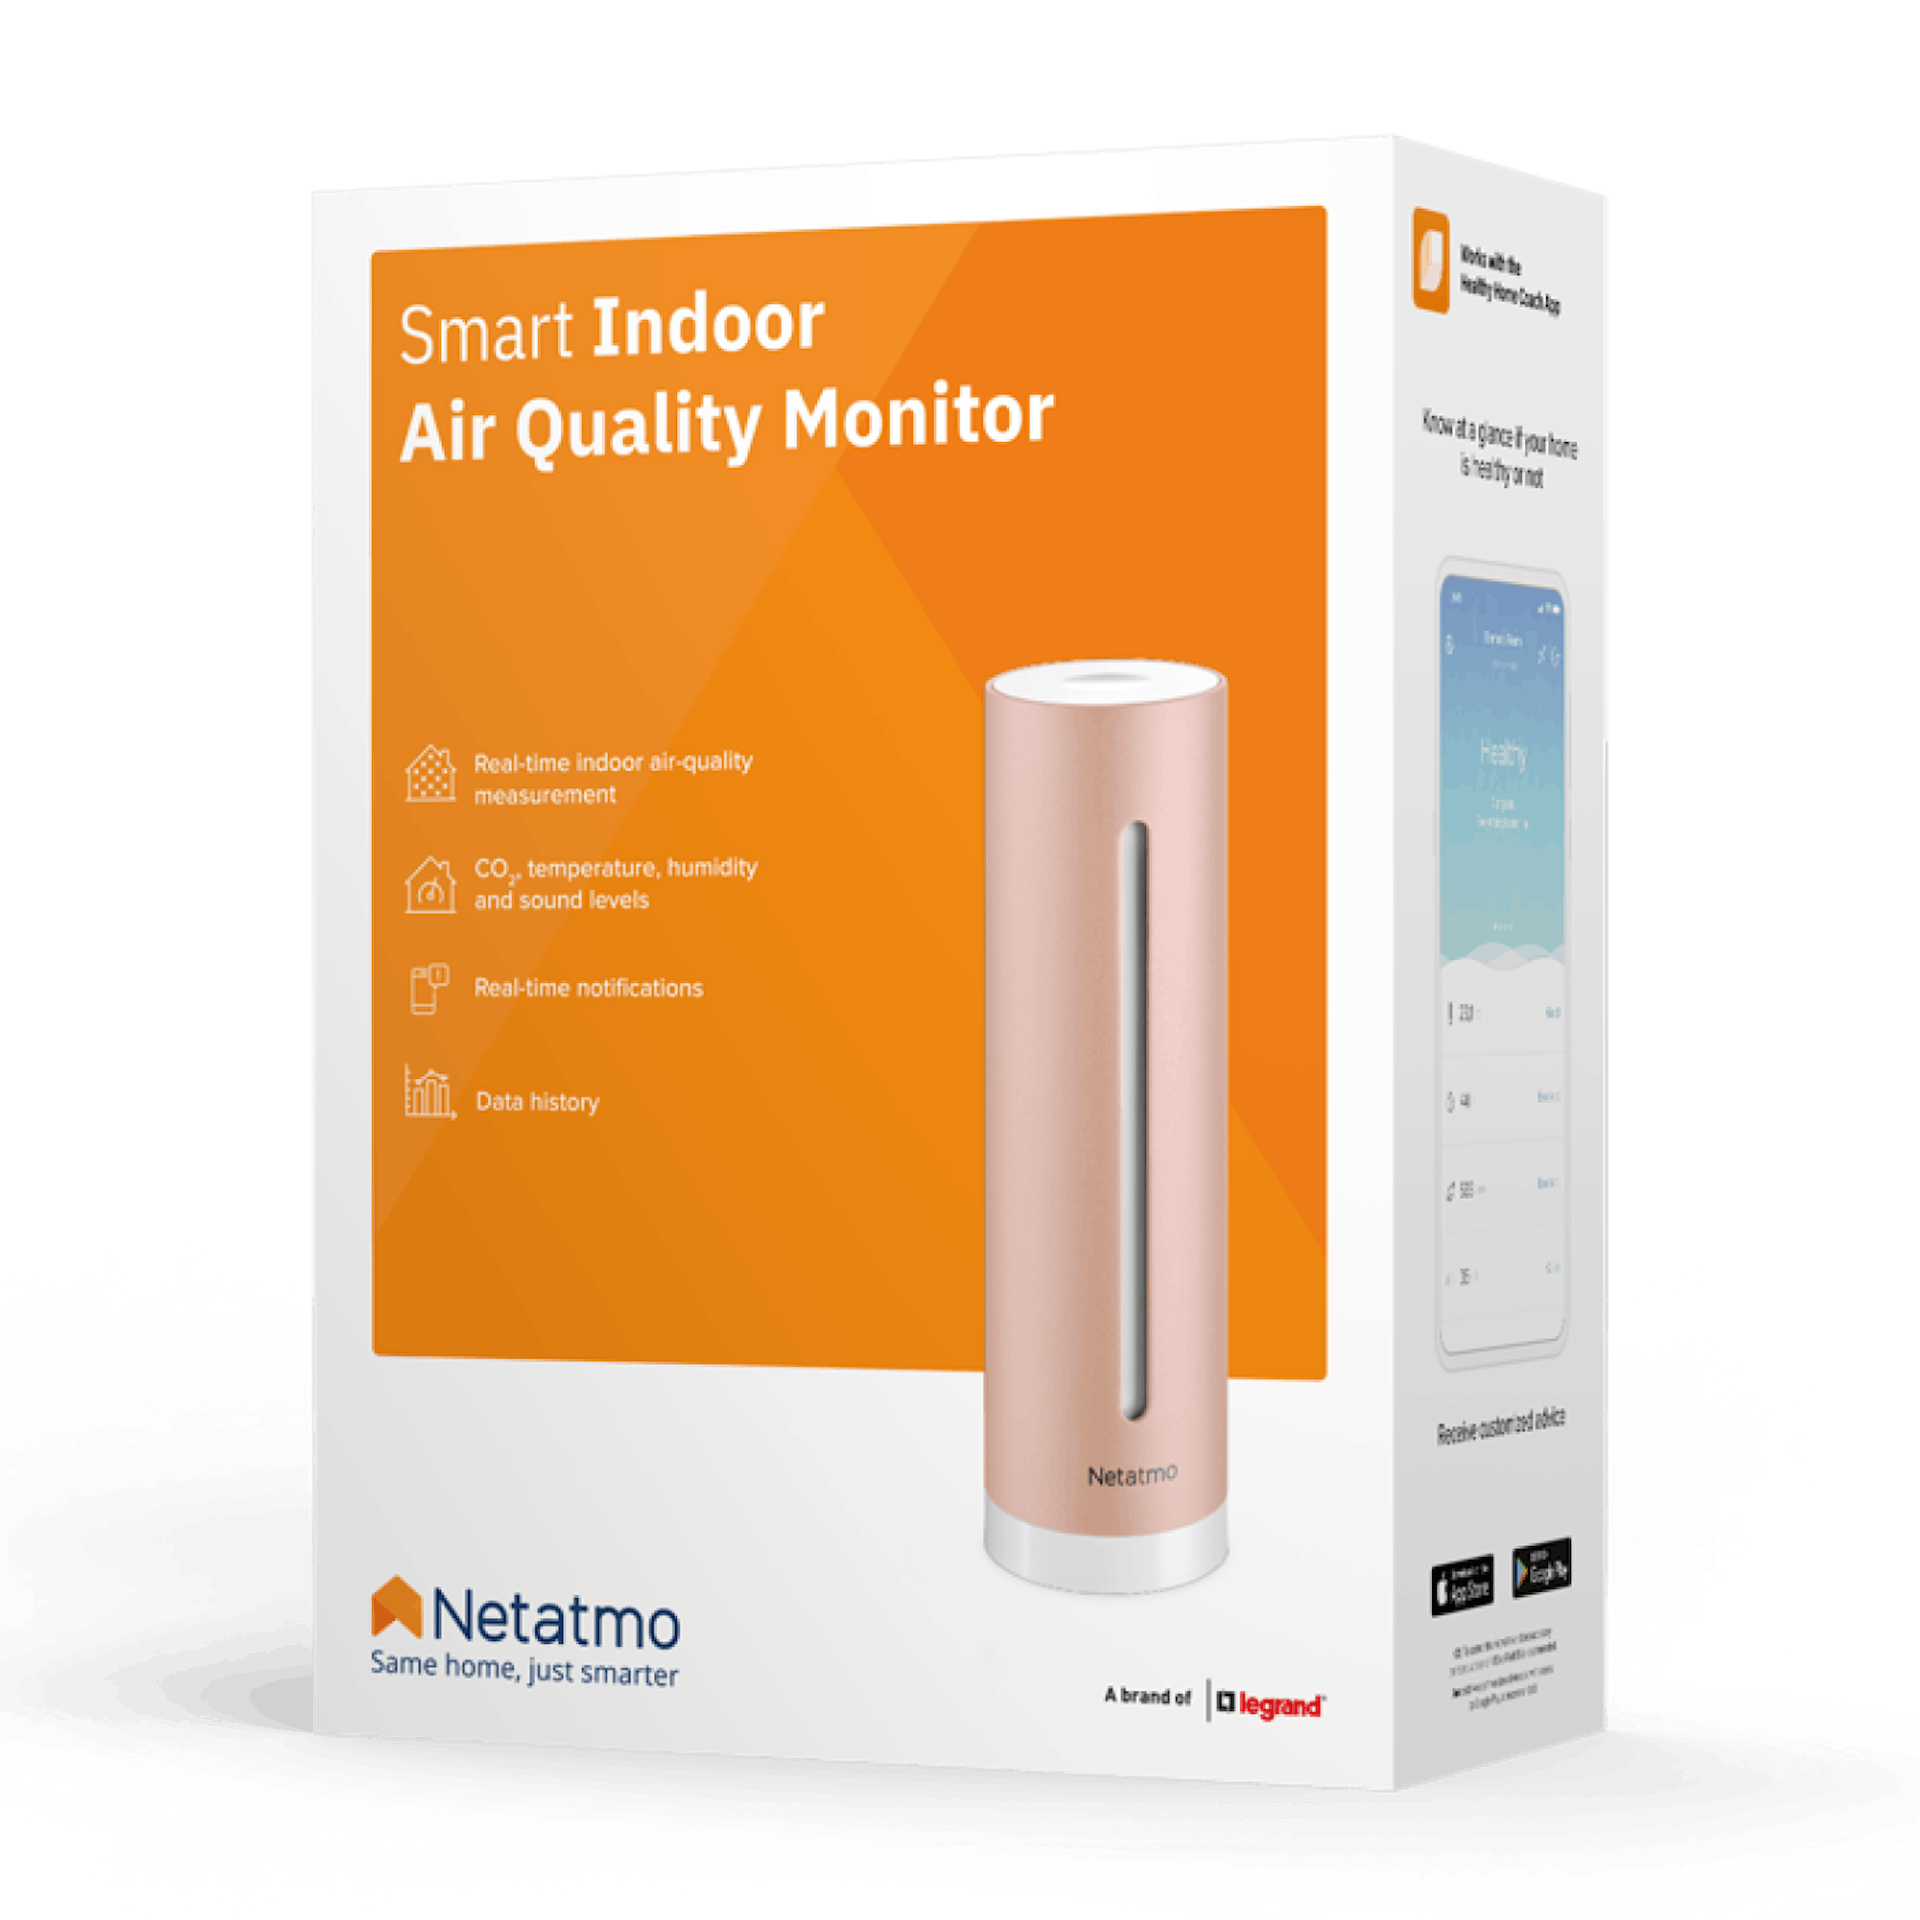 Netatmo Air Quality Monitor - Packaging Image